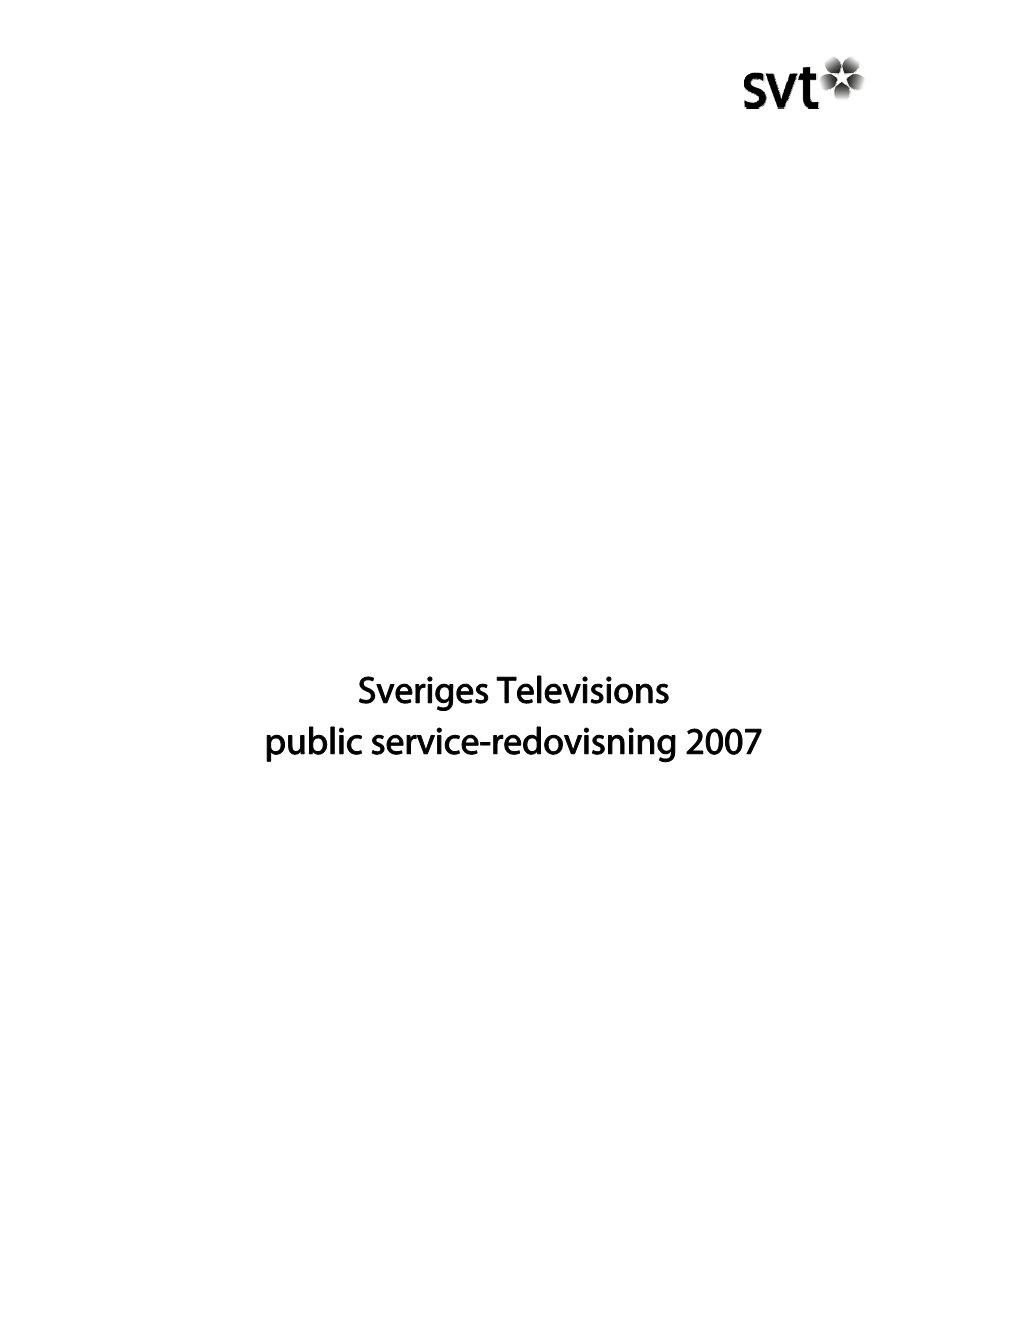 Sveriges Televisions Public Service-Redovisning 2007